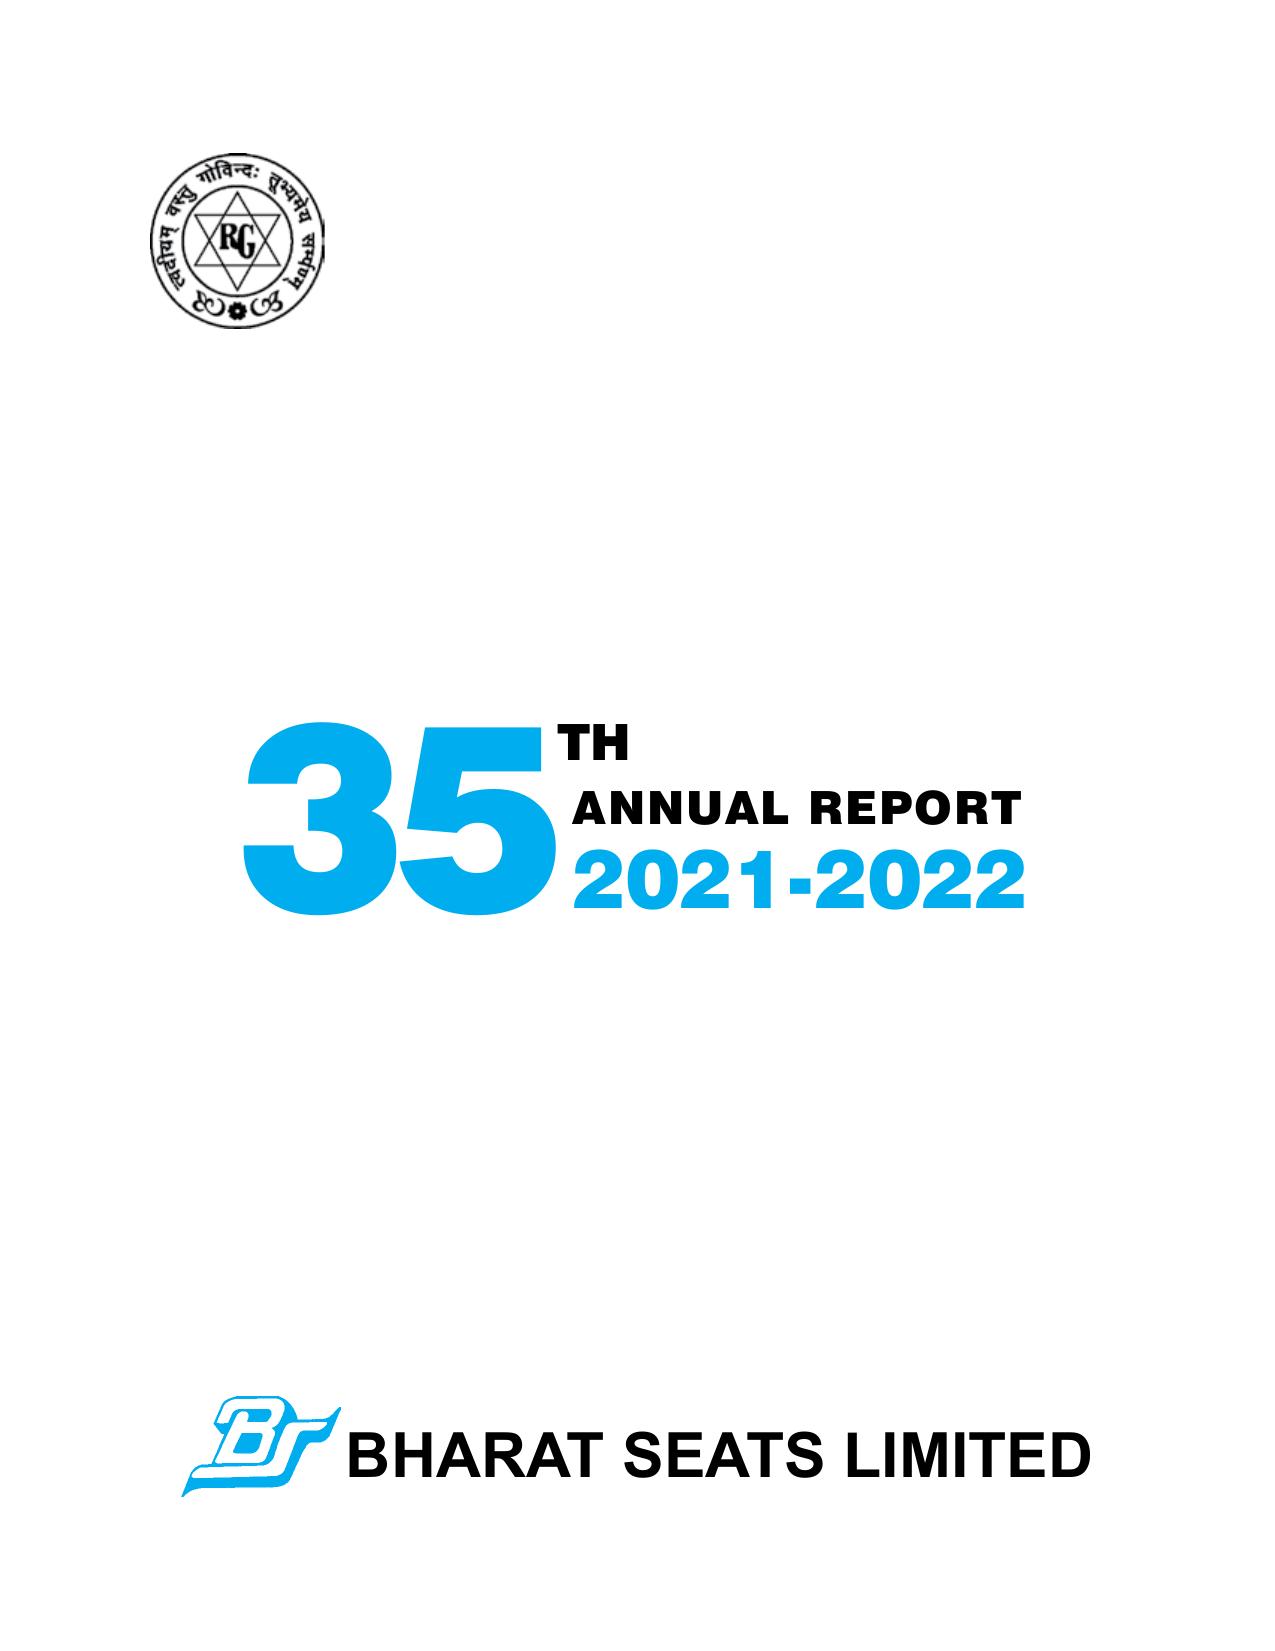 PRAXISRETAIL 2022 Annual Report